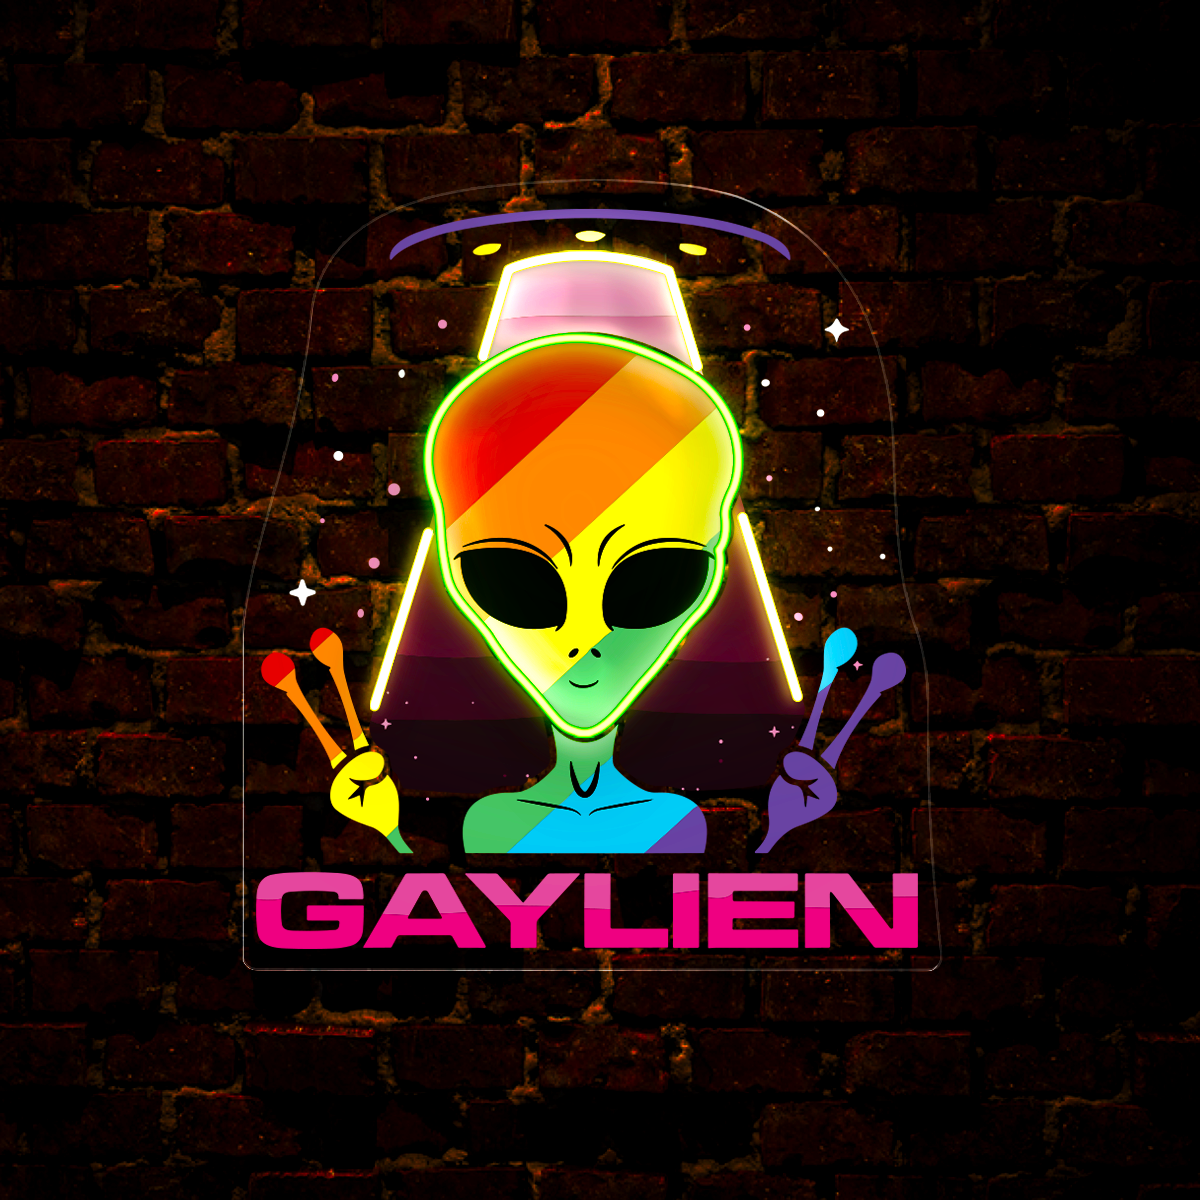 Funny LGBT Pride Gaylien Artwork Neon Sign